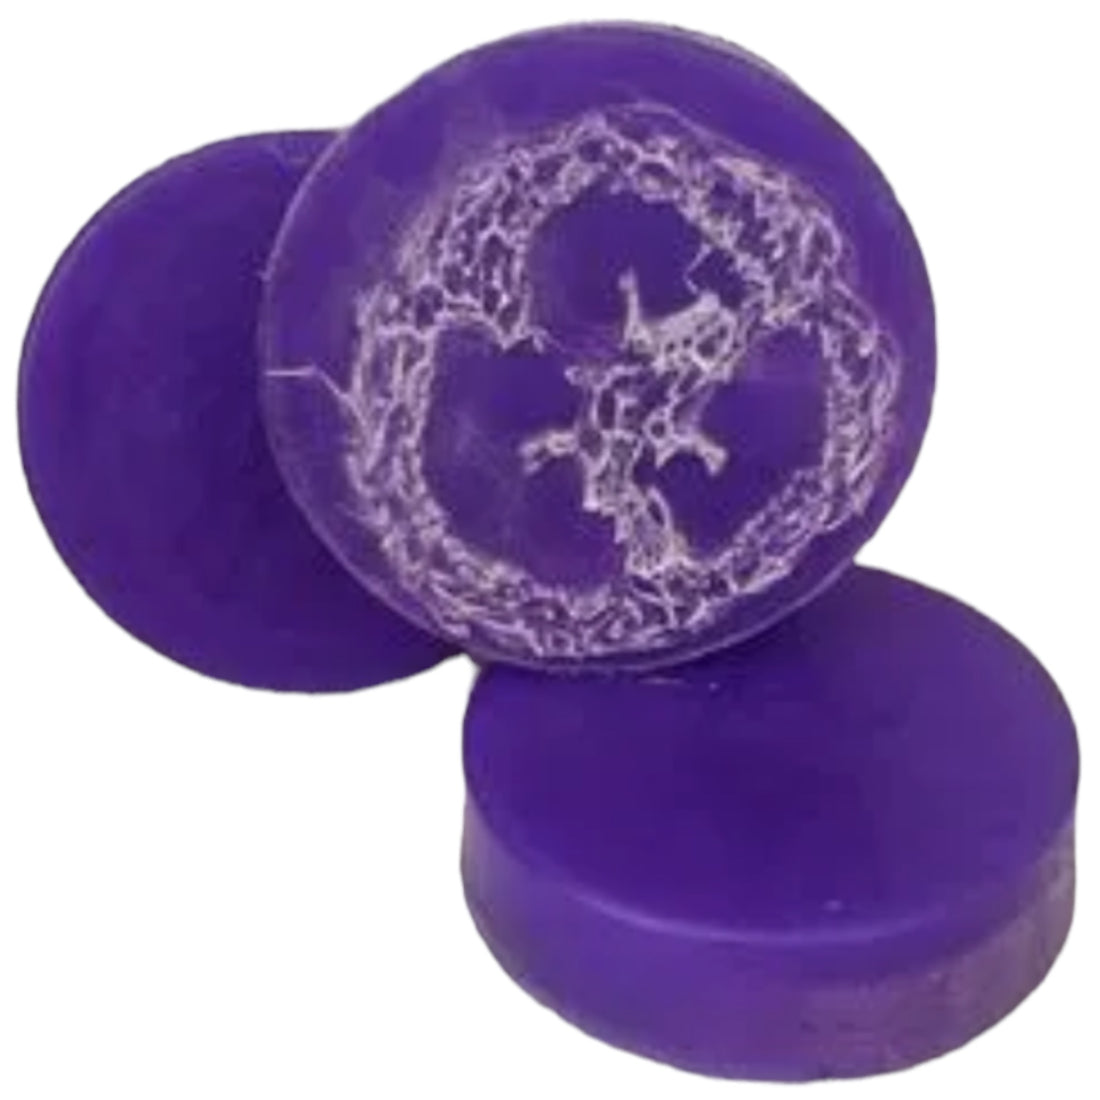 Purple Rain Loofah Soap